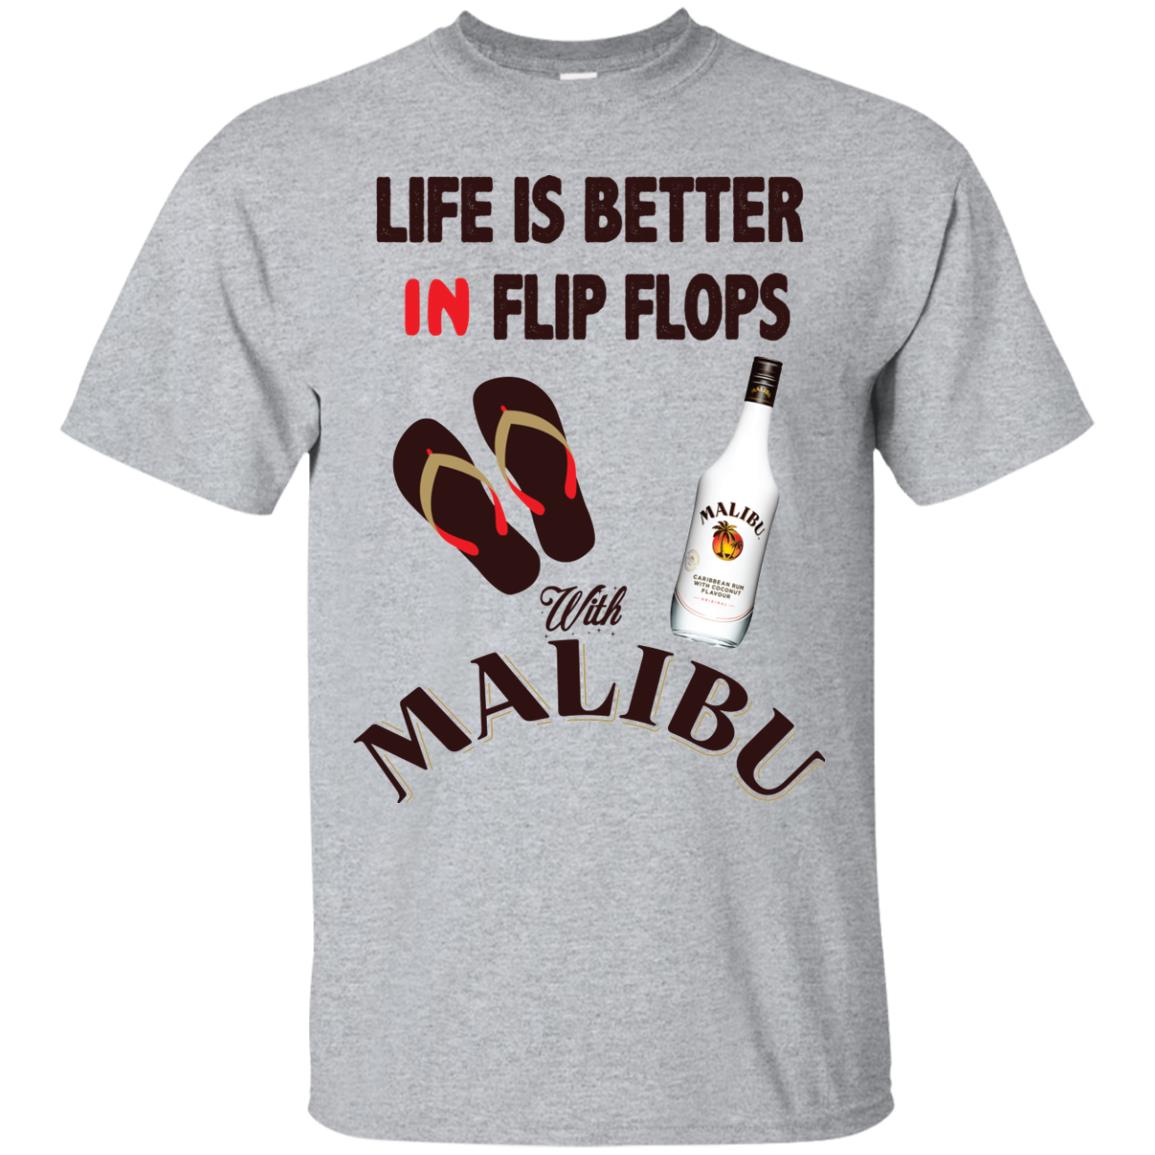 Life Is Better In Flip Flops With Malibu Rum T-Shirts, Hoodies, Tank Top